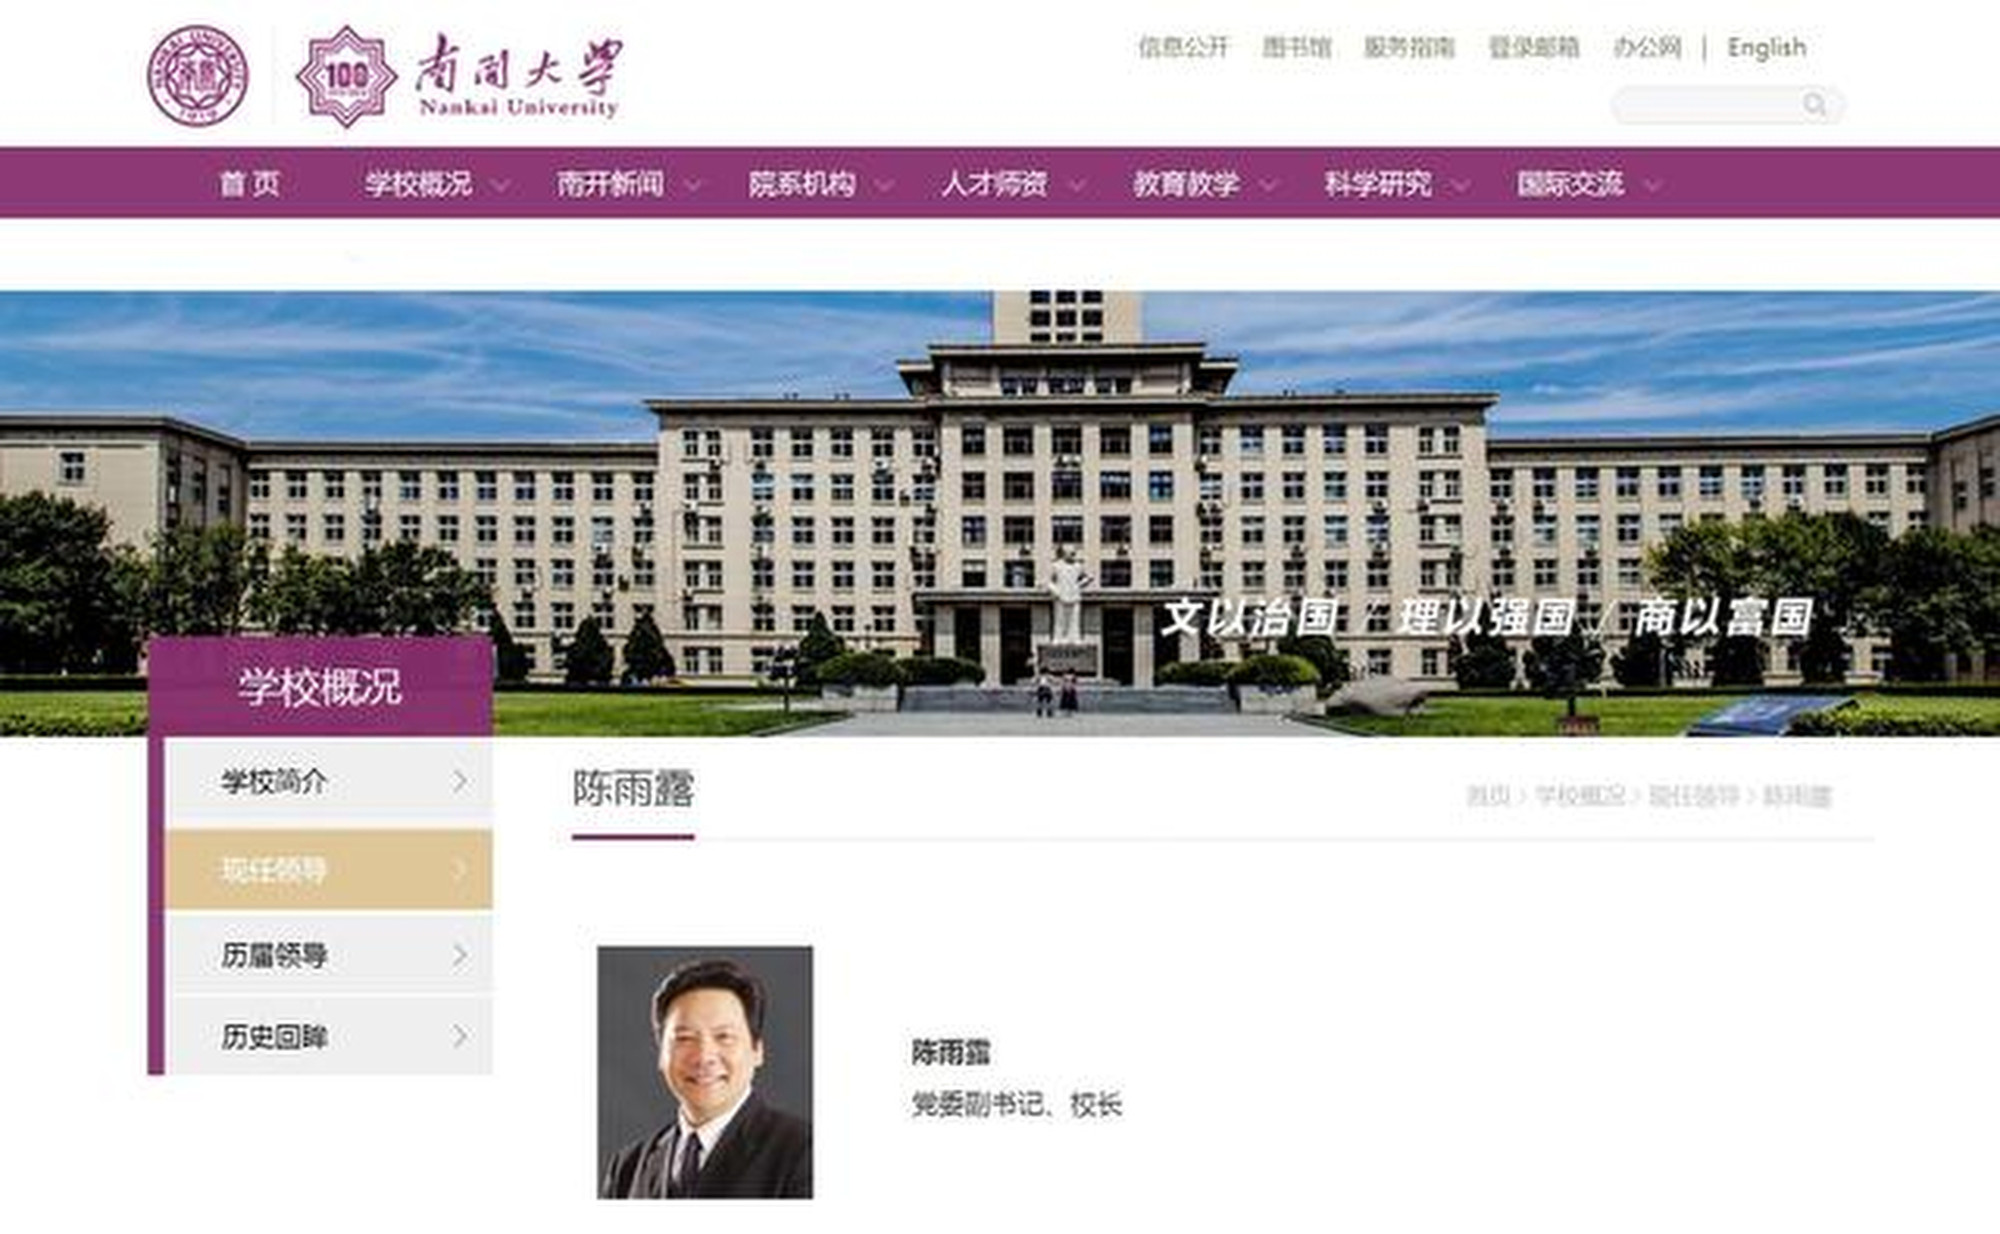 Chen Yulu has been appointed as the president of Nankai University. Photo: Nankai University